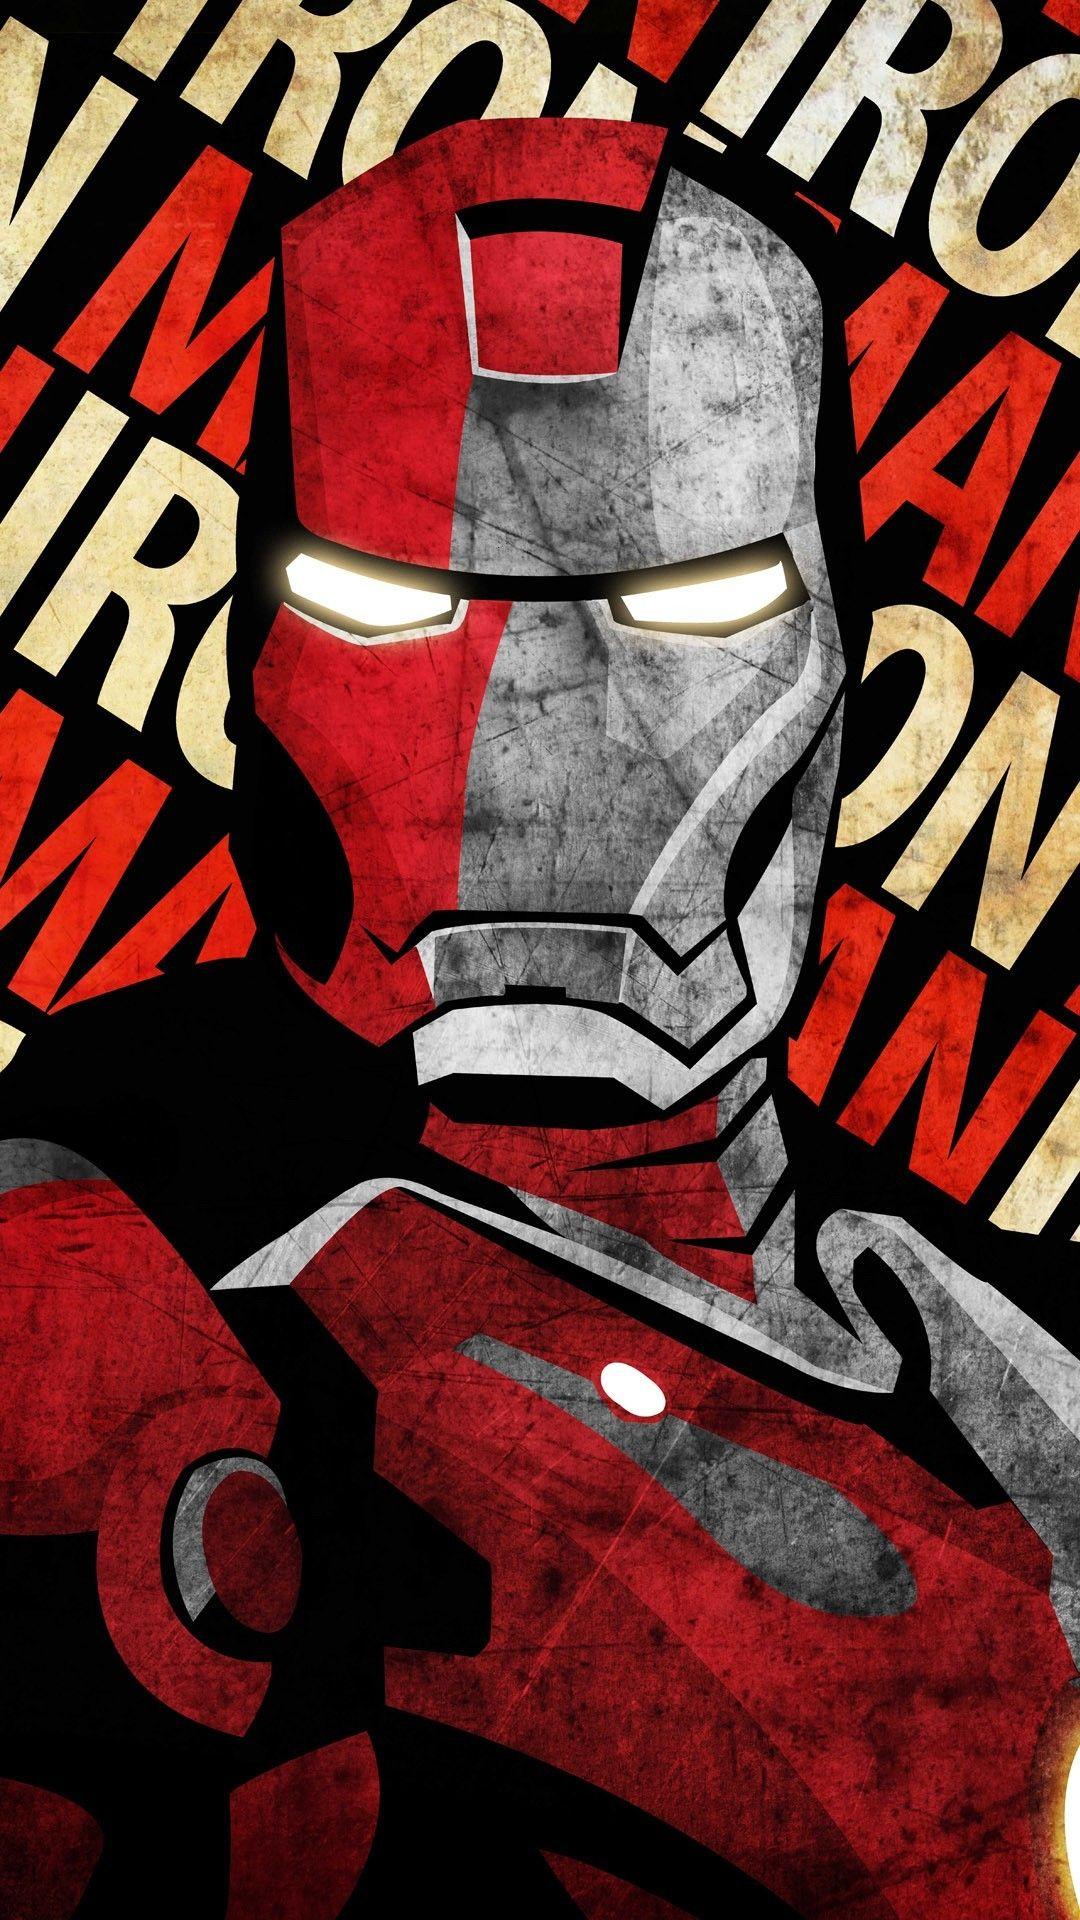 Iron Man Iphone Wallpapers Top Free Iron Man Iphone Backgrounds